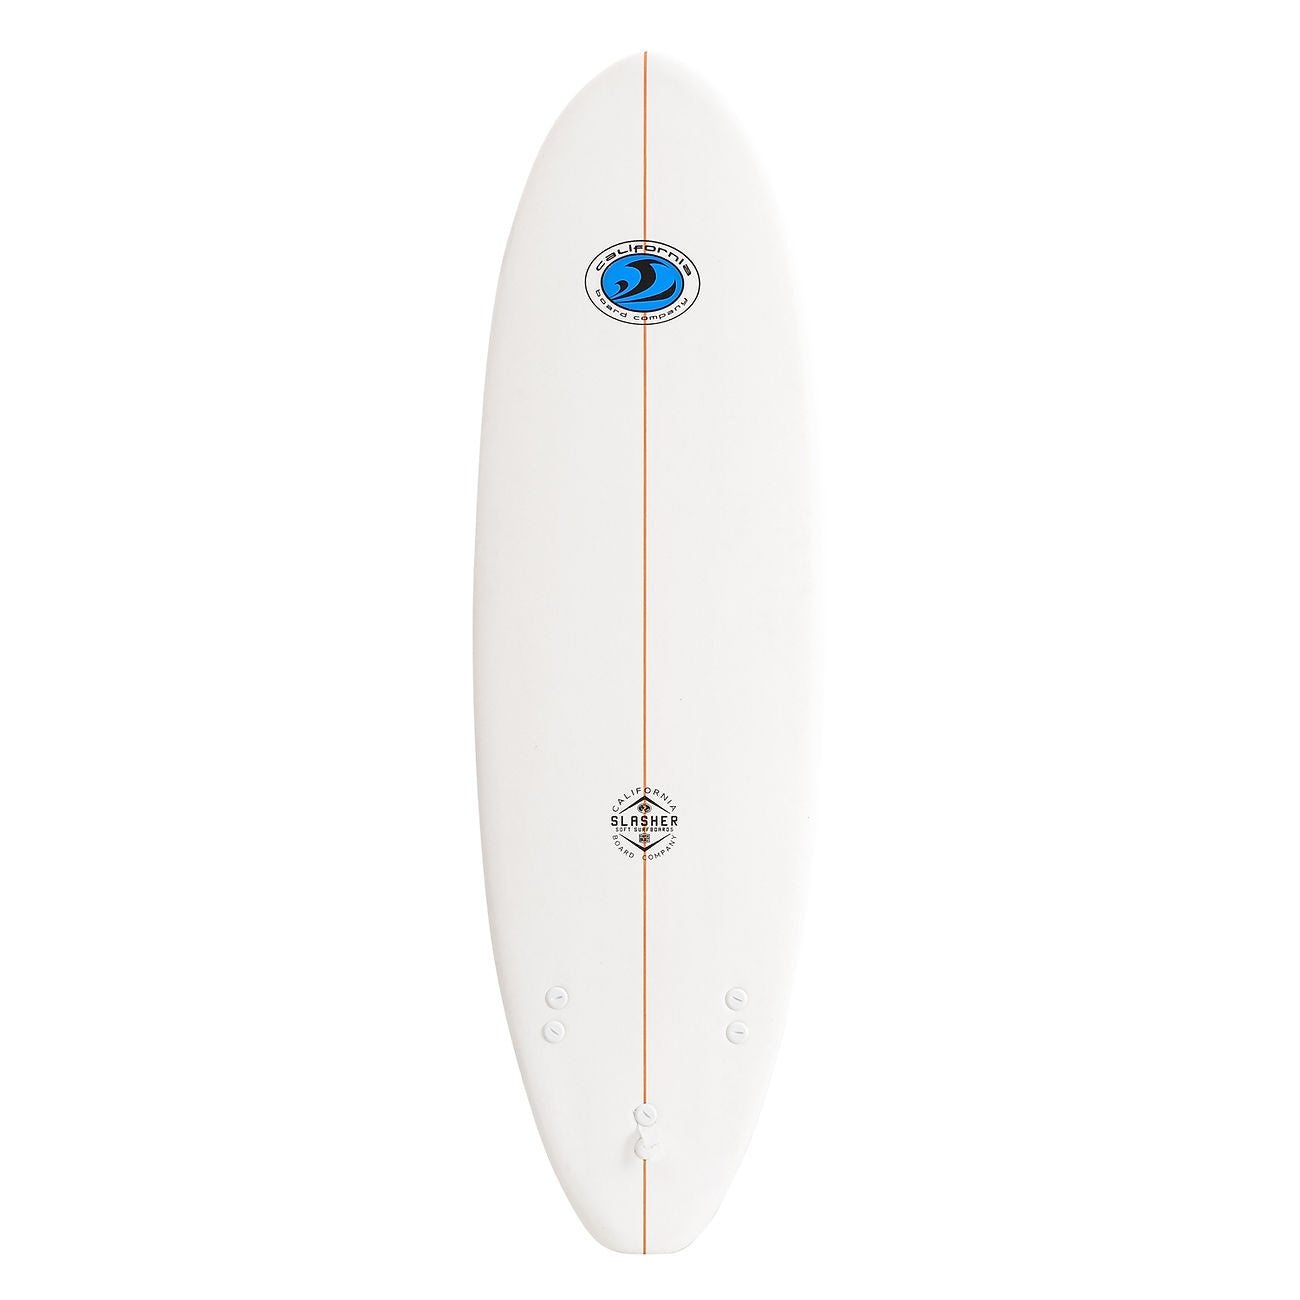 CBC - Tabla de surf de espuma - Softboard Slasher 6'0 - Blanco